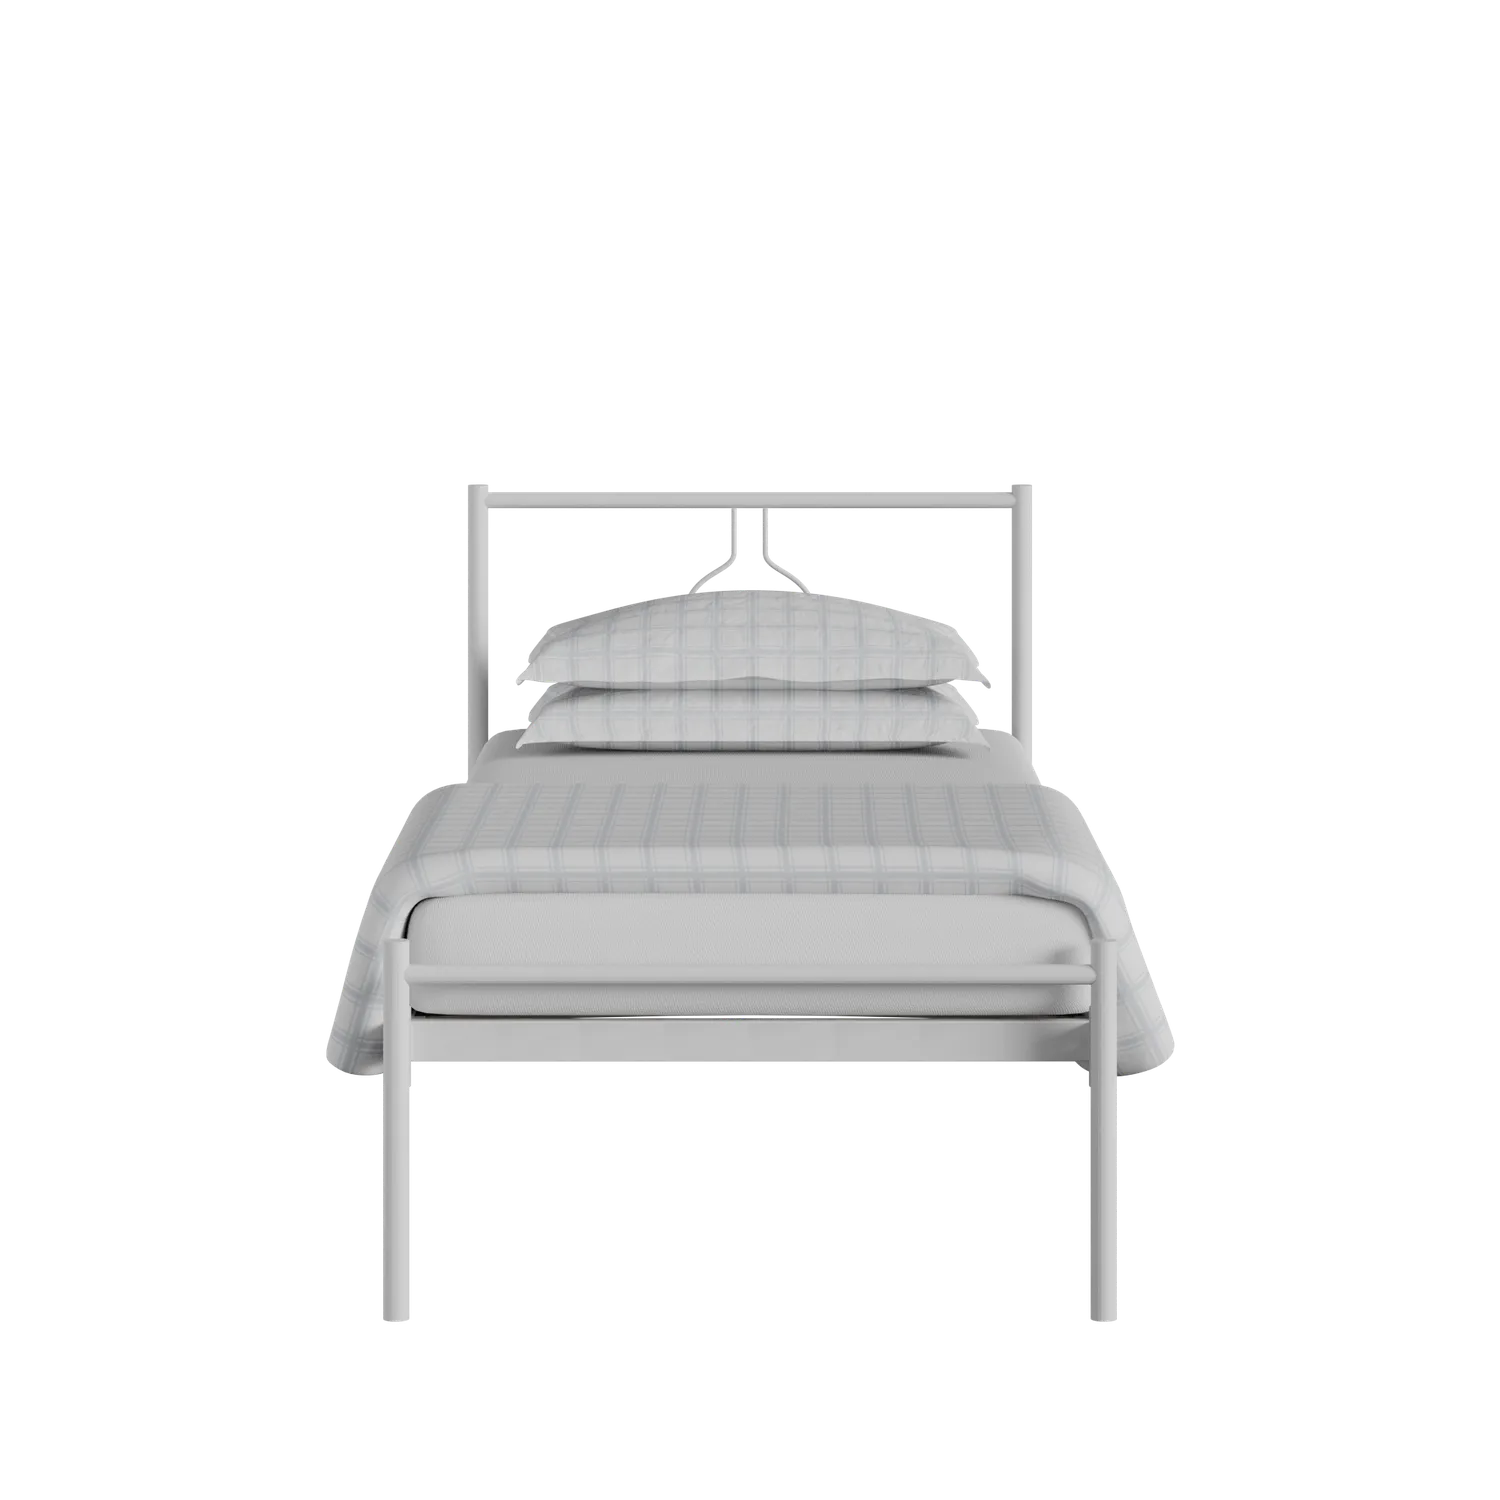 Meiji iron/metal single bed in white